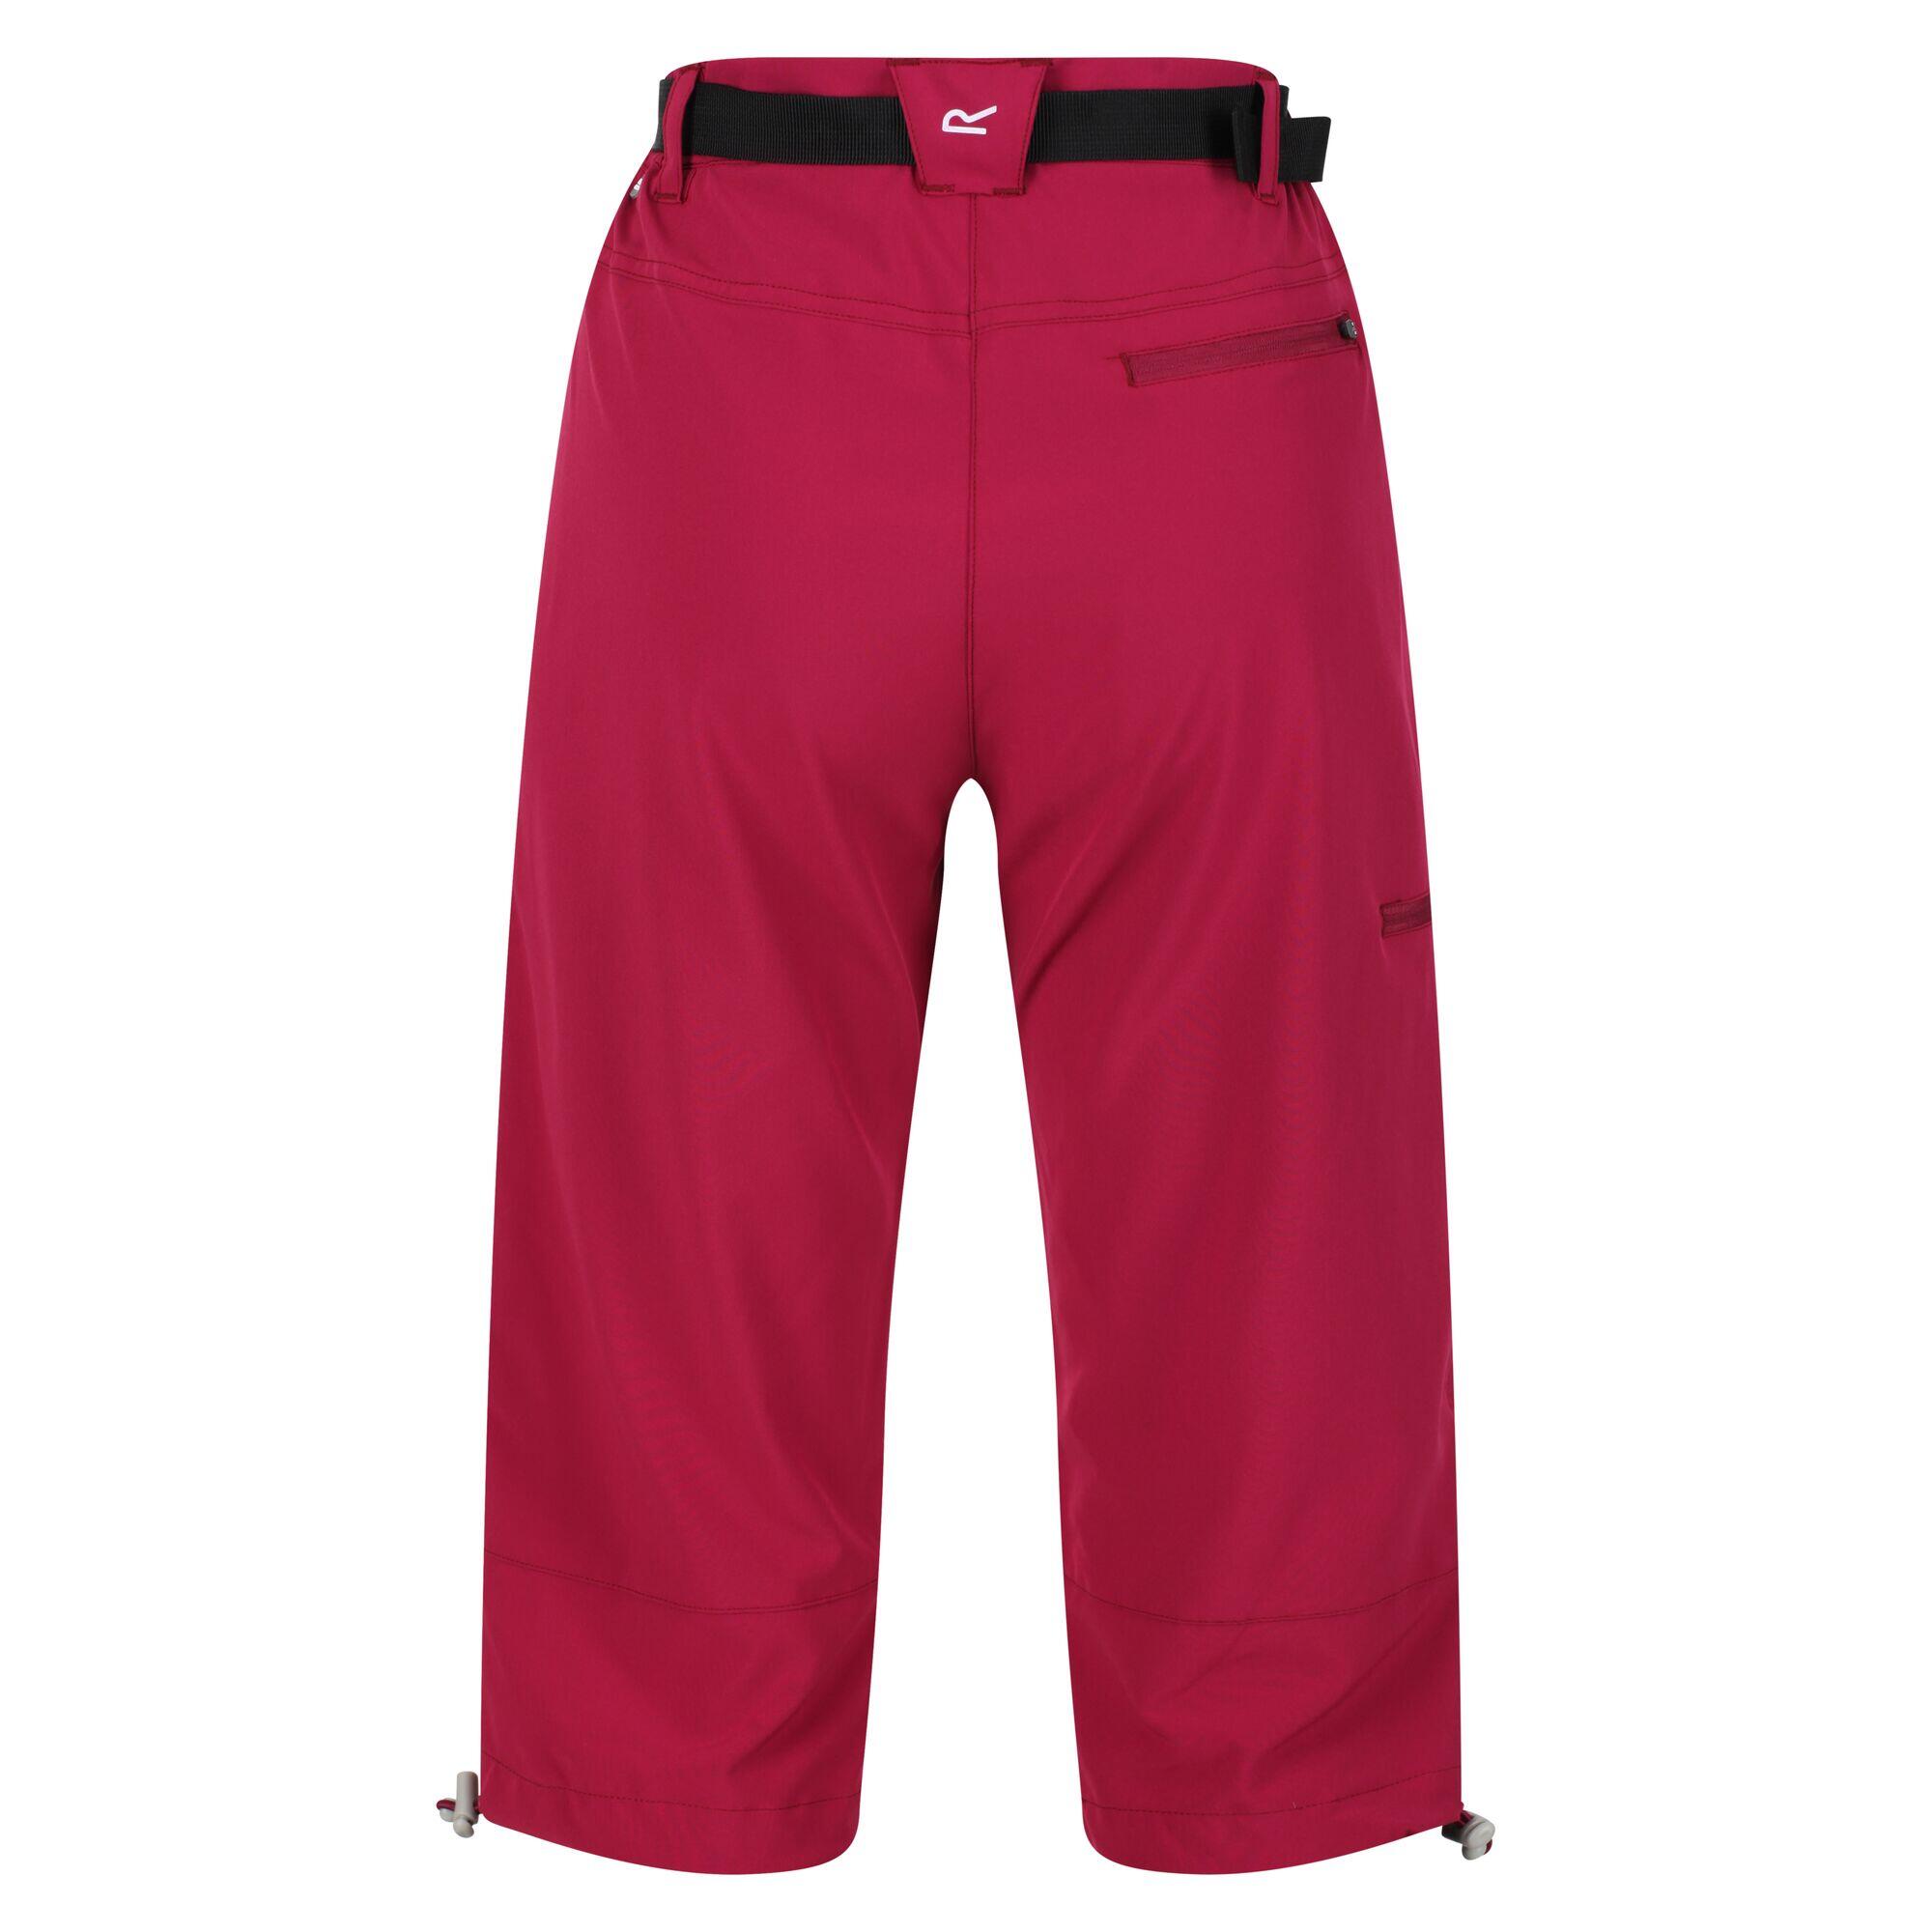 Xert Stretch Women's Walking Capris - Pink Plum 4/7